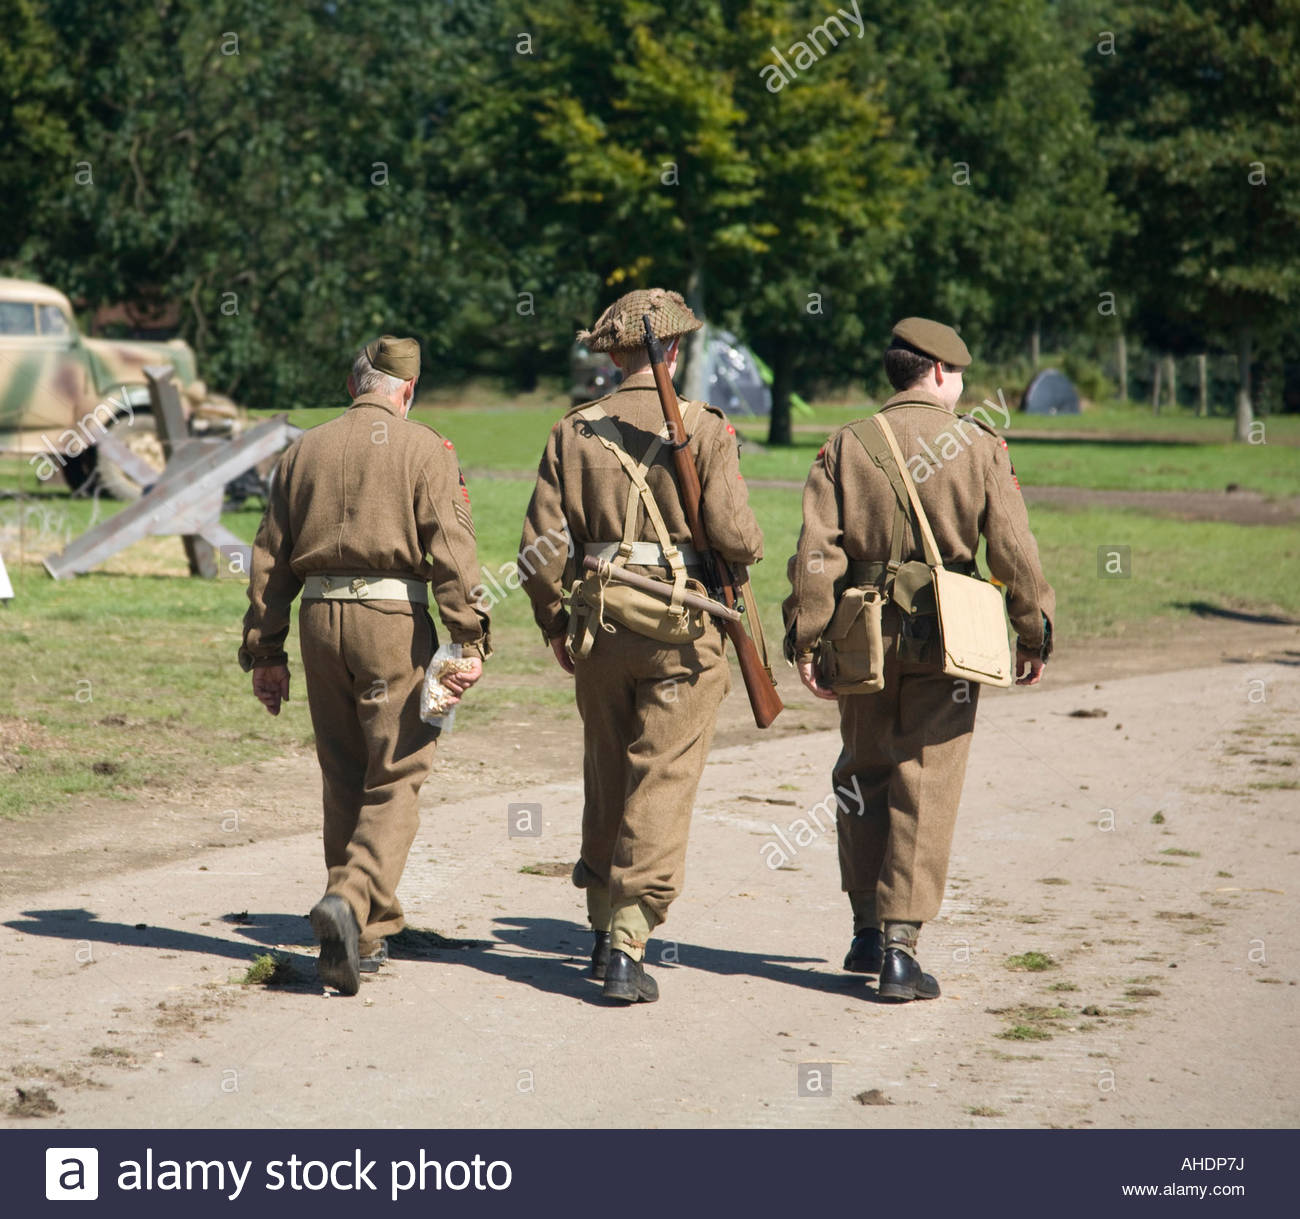 Ww2 British Soldier Uniform Stock Photos & Ww2 British Soldier Uniform ...